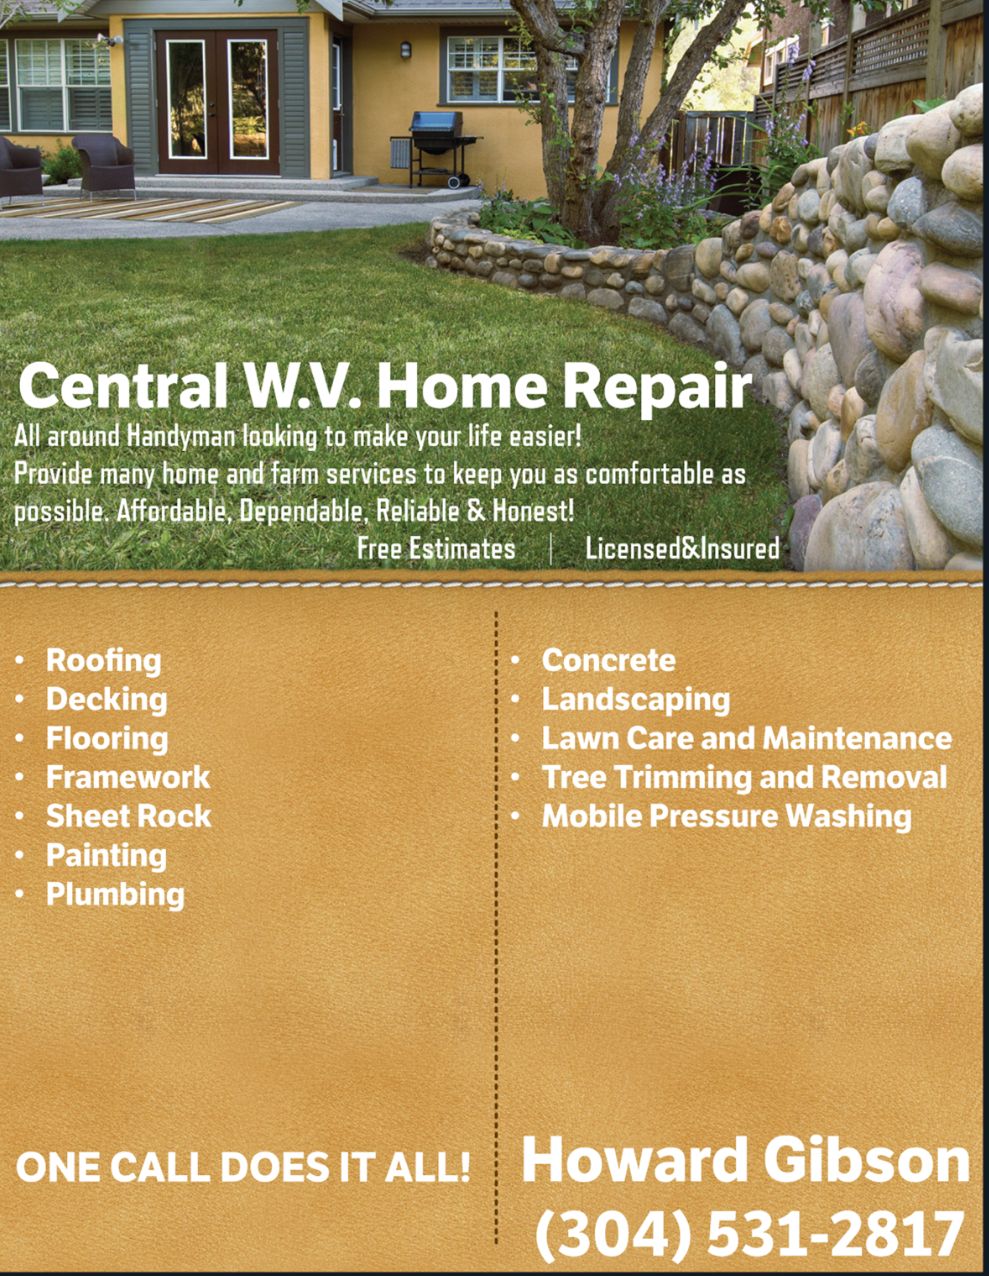 Central W.V. Home Repair